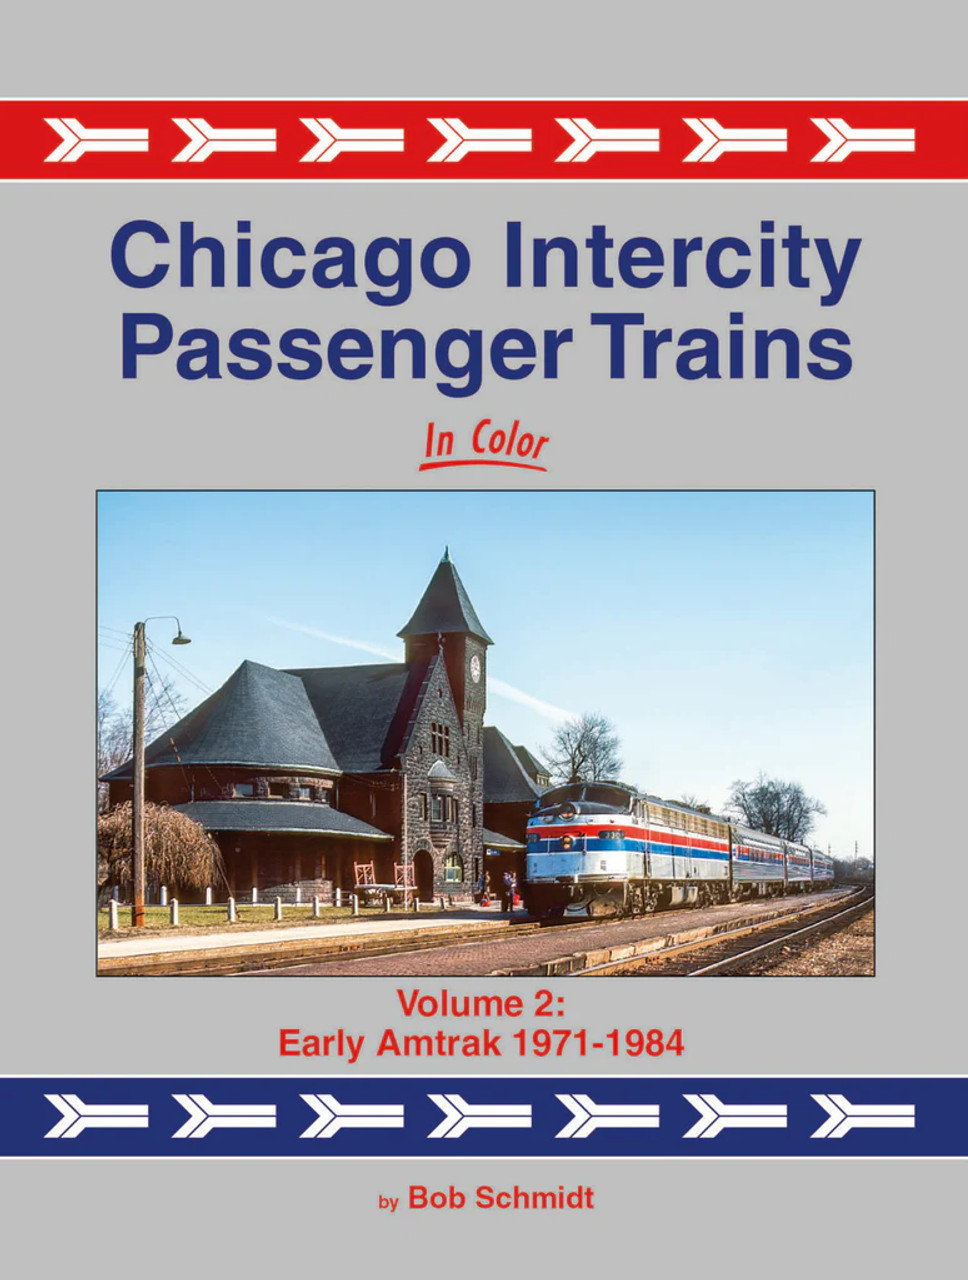 Morning Sun 1761 Chicago Intercity Passenger Trains In Color Volume 2: Early Amtrak 1971-1984